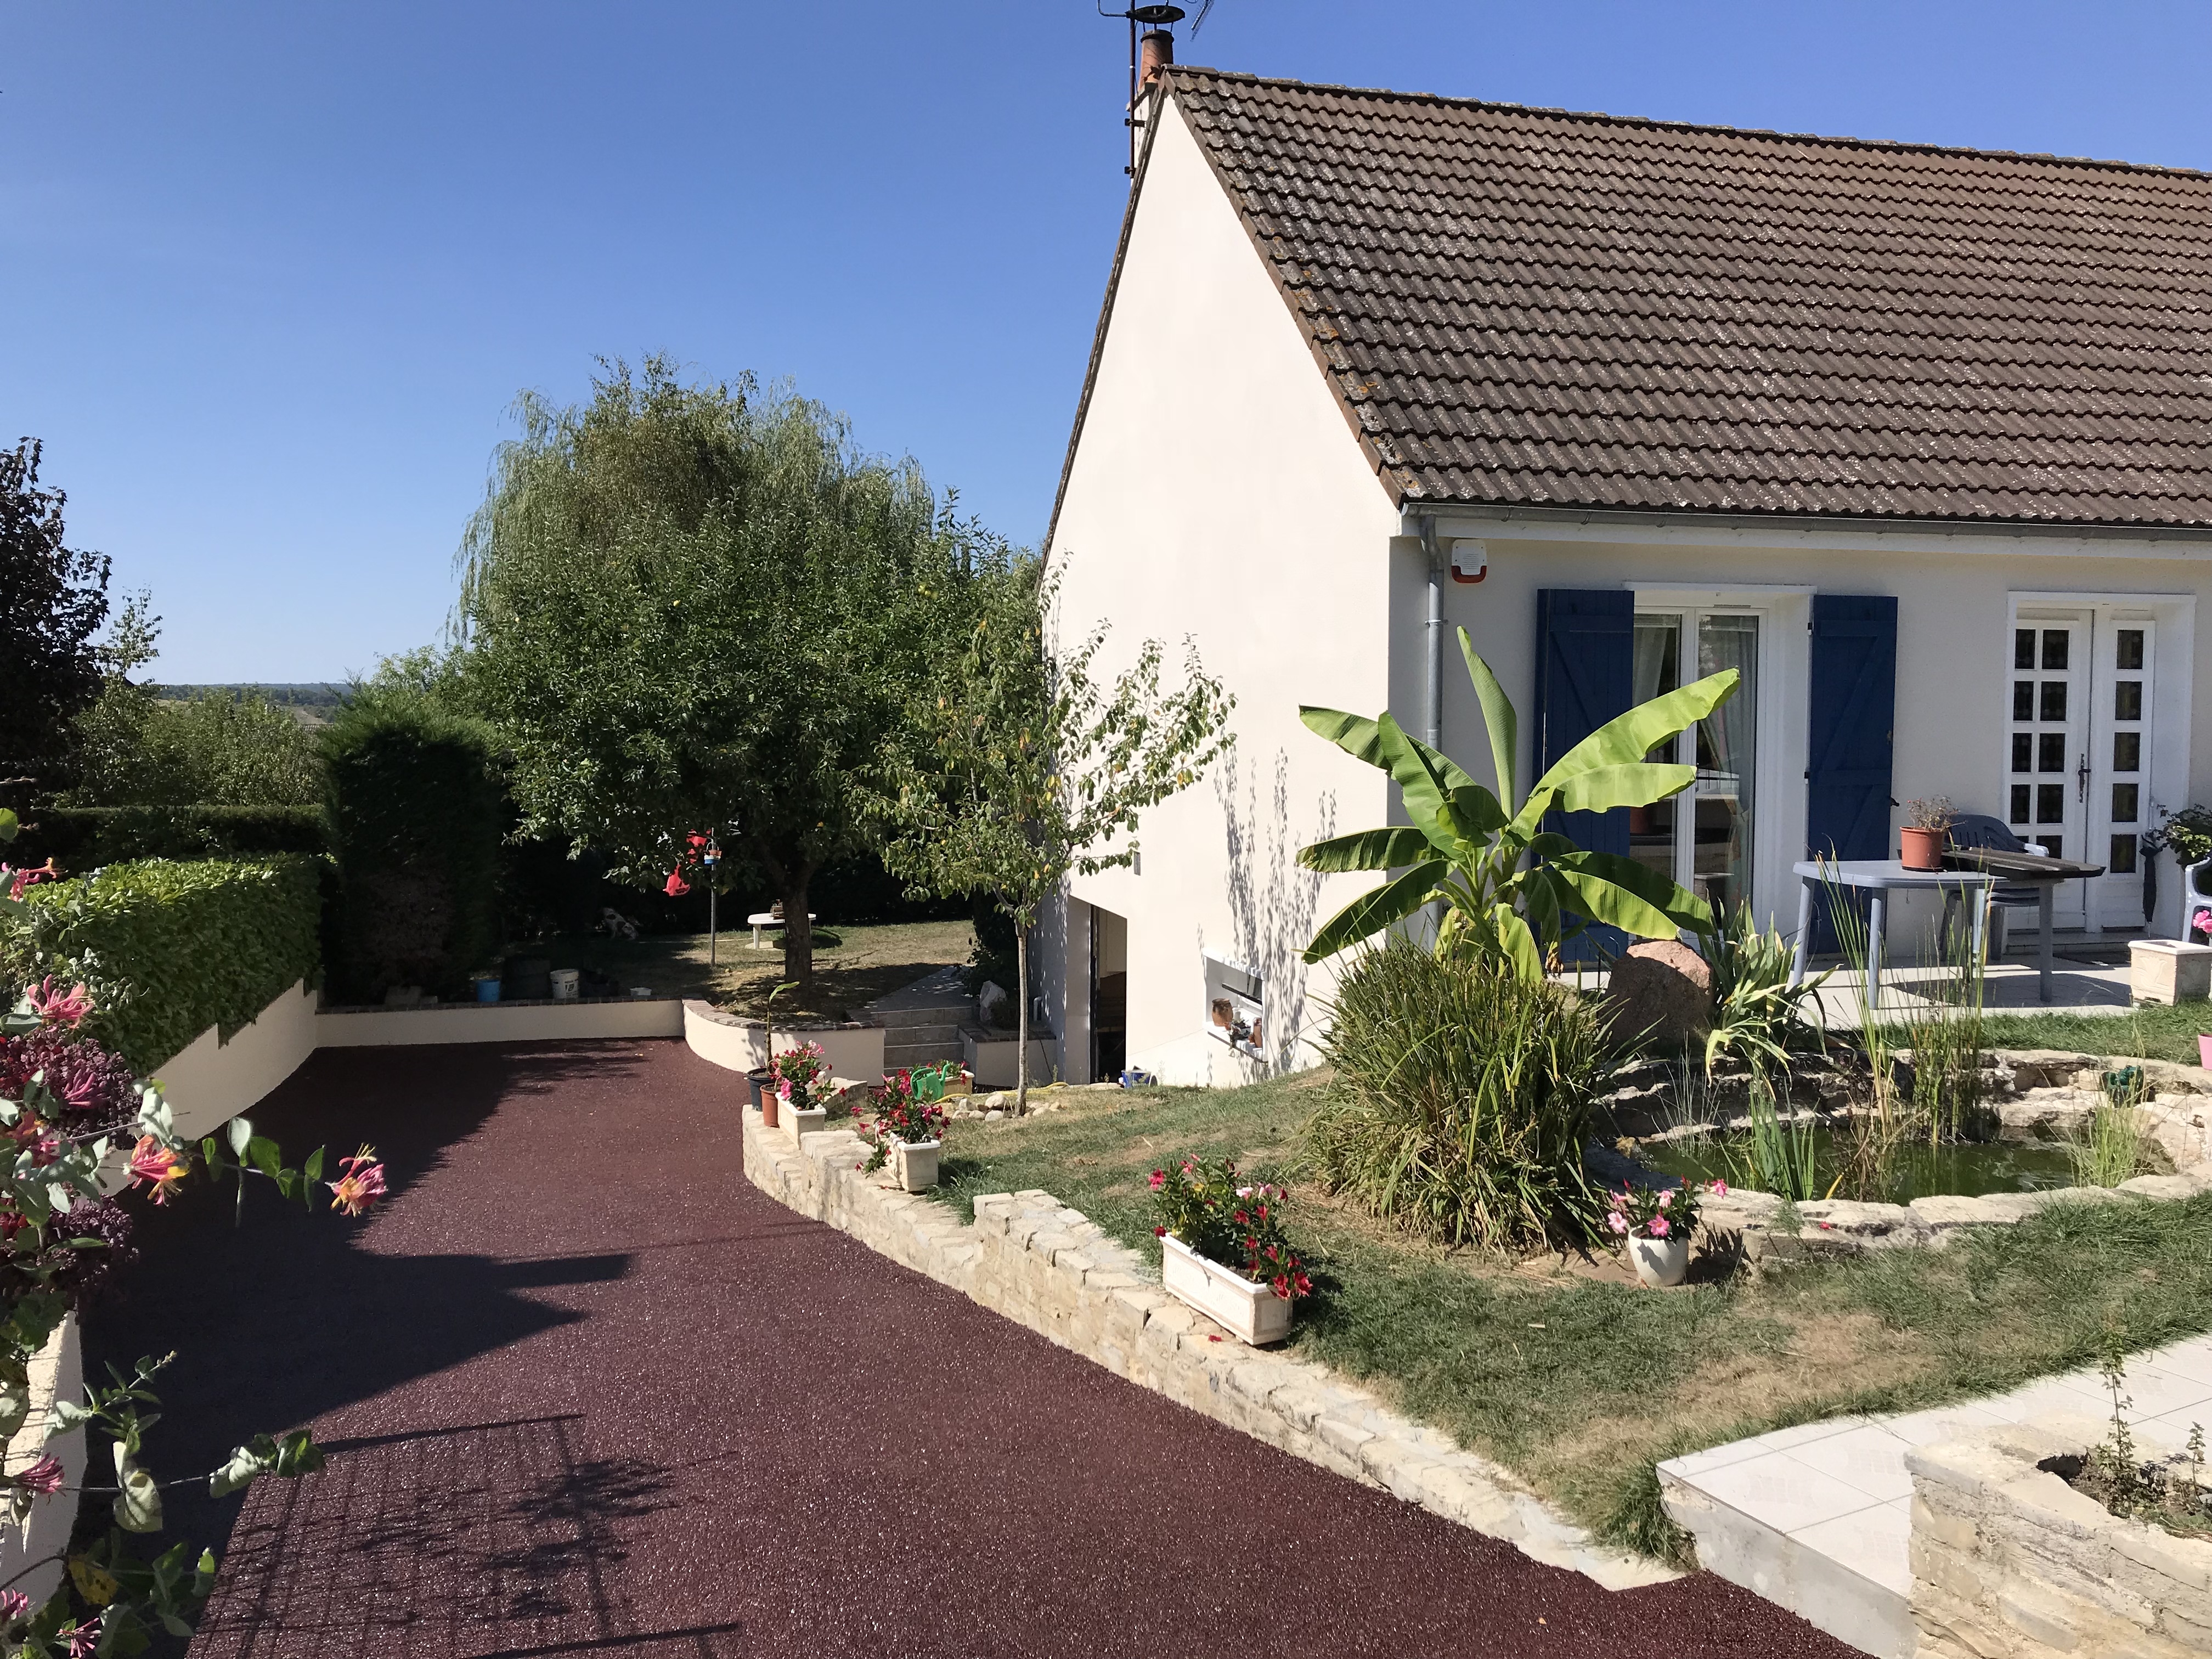 Ralisation Alle de garage en Stardraine - Yonne conue le 19/09/2018